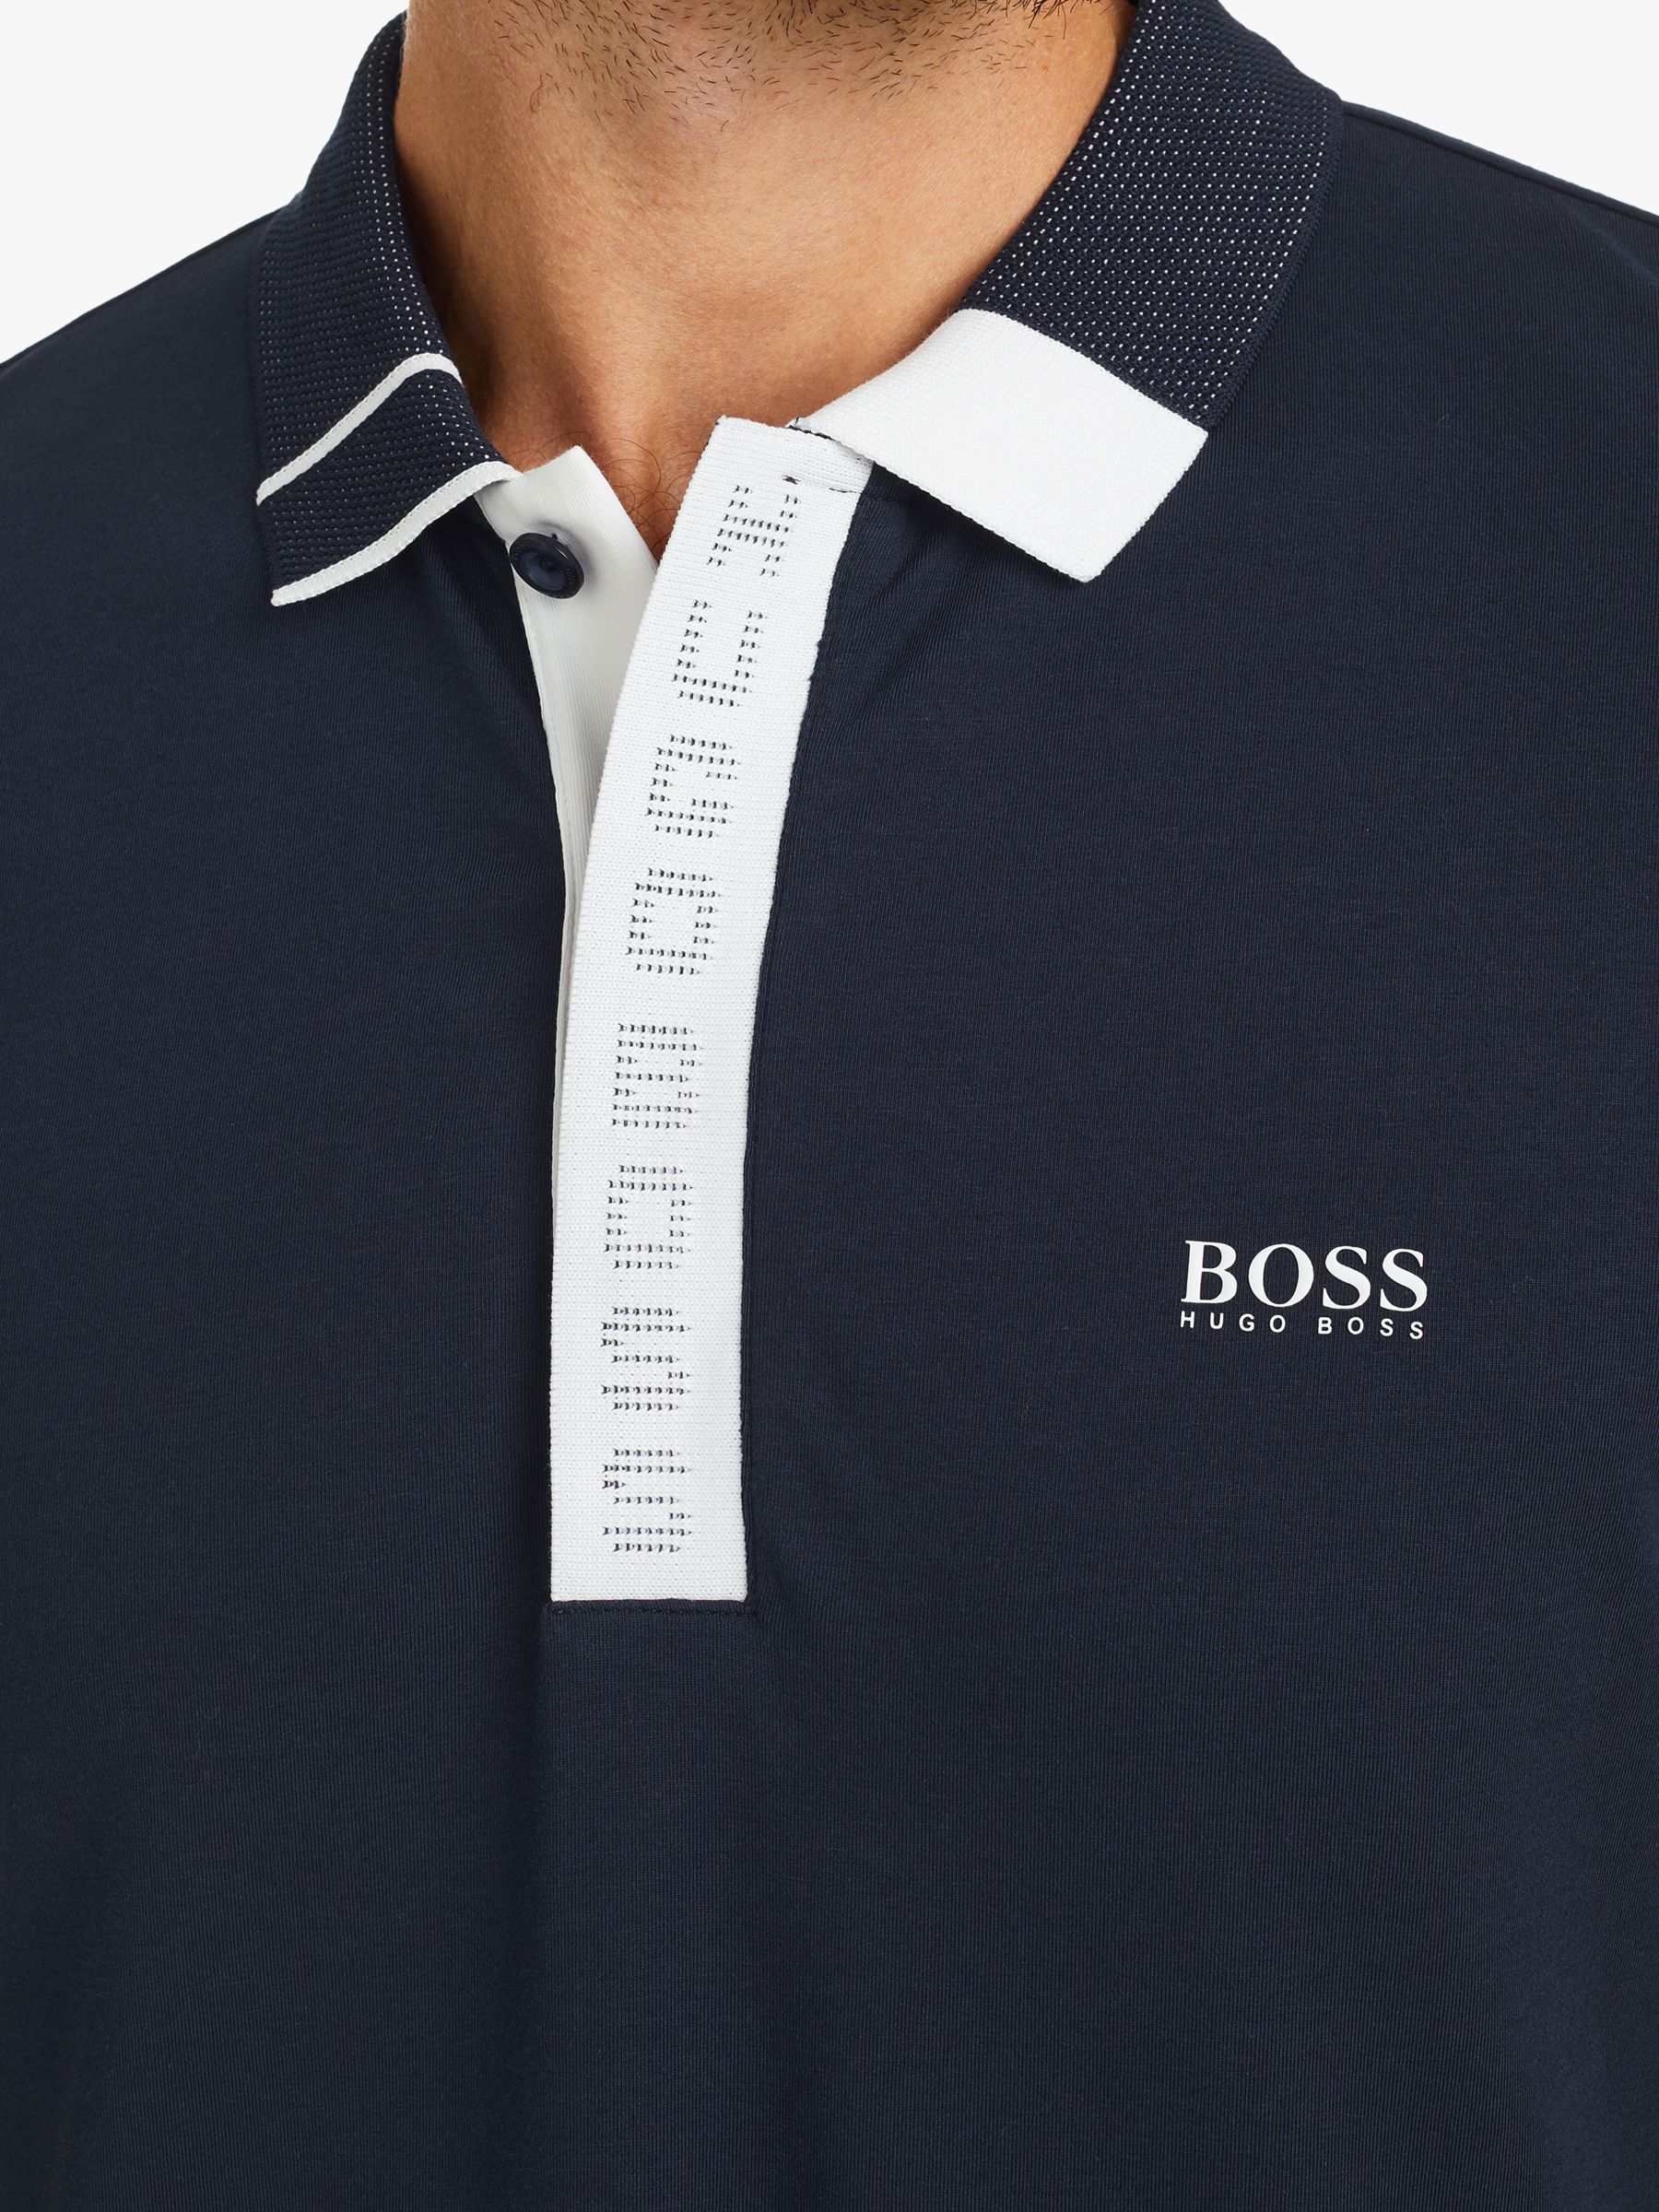 hugo boss polo shirt navy